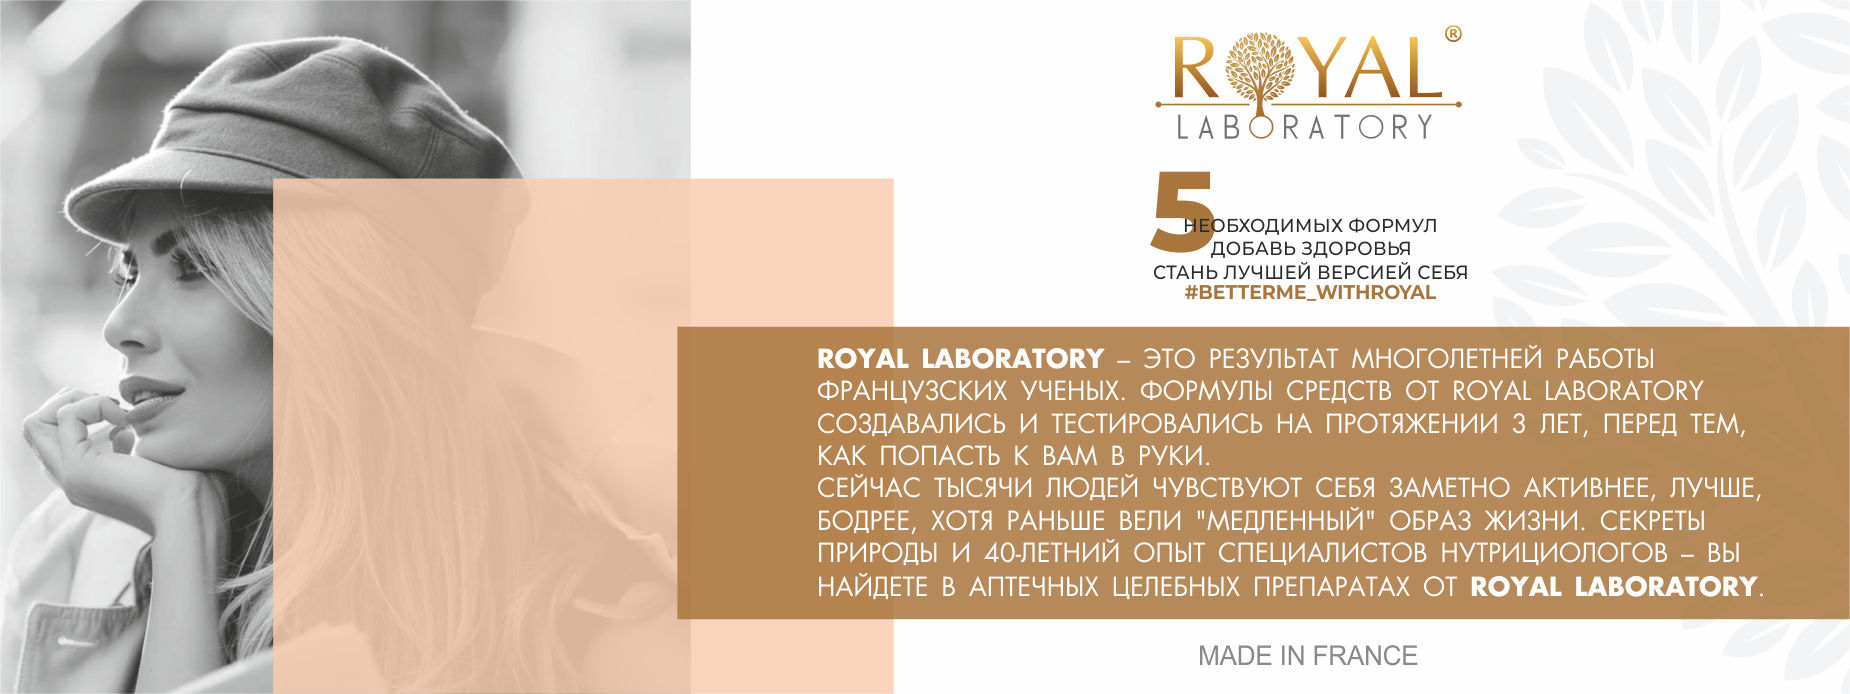 Royal Laboratory